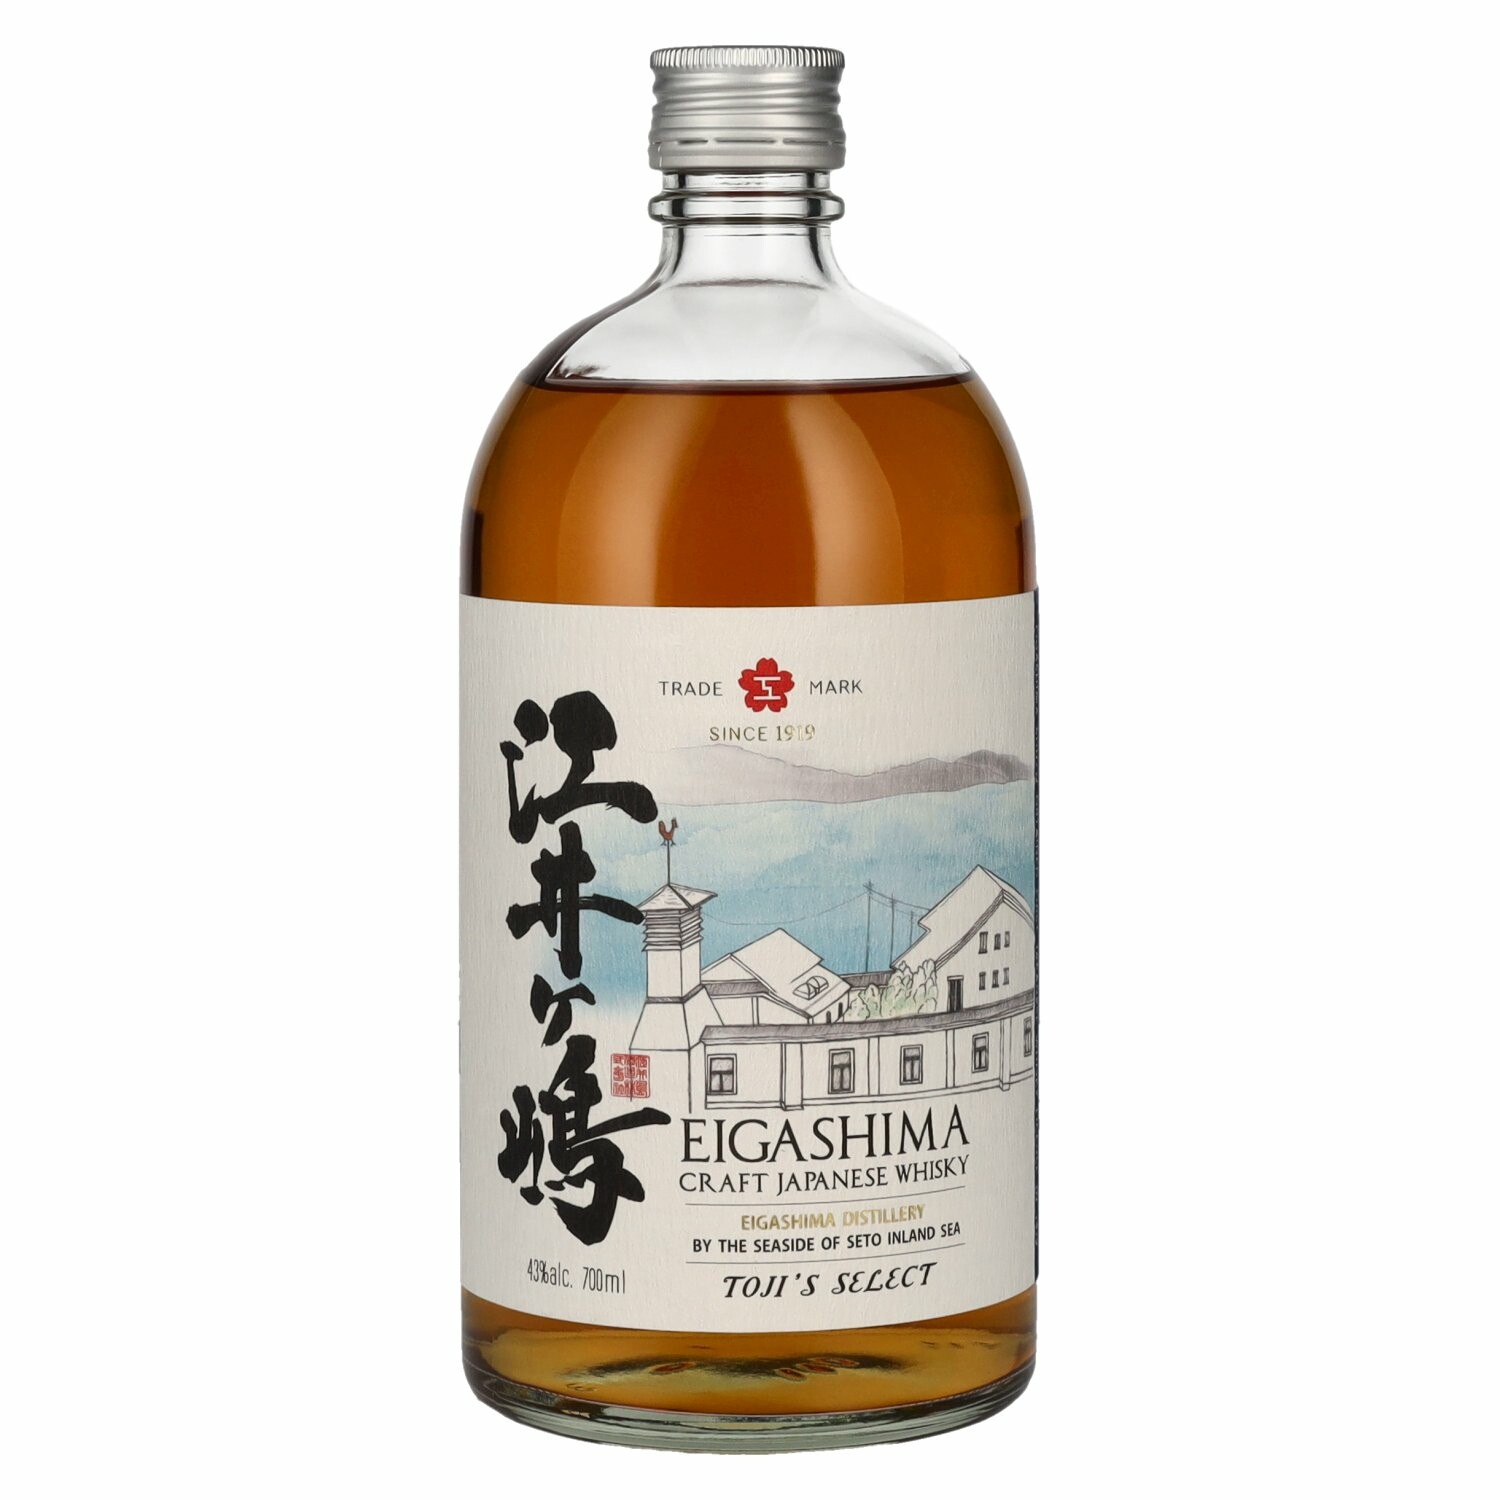 Eigashima Toji's Select Craft Japanese Whisky 43% Vol. 0,7l